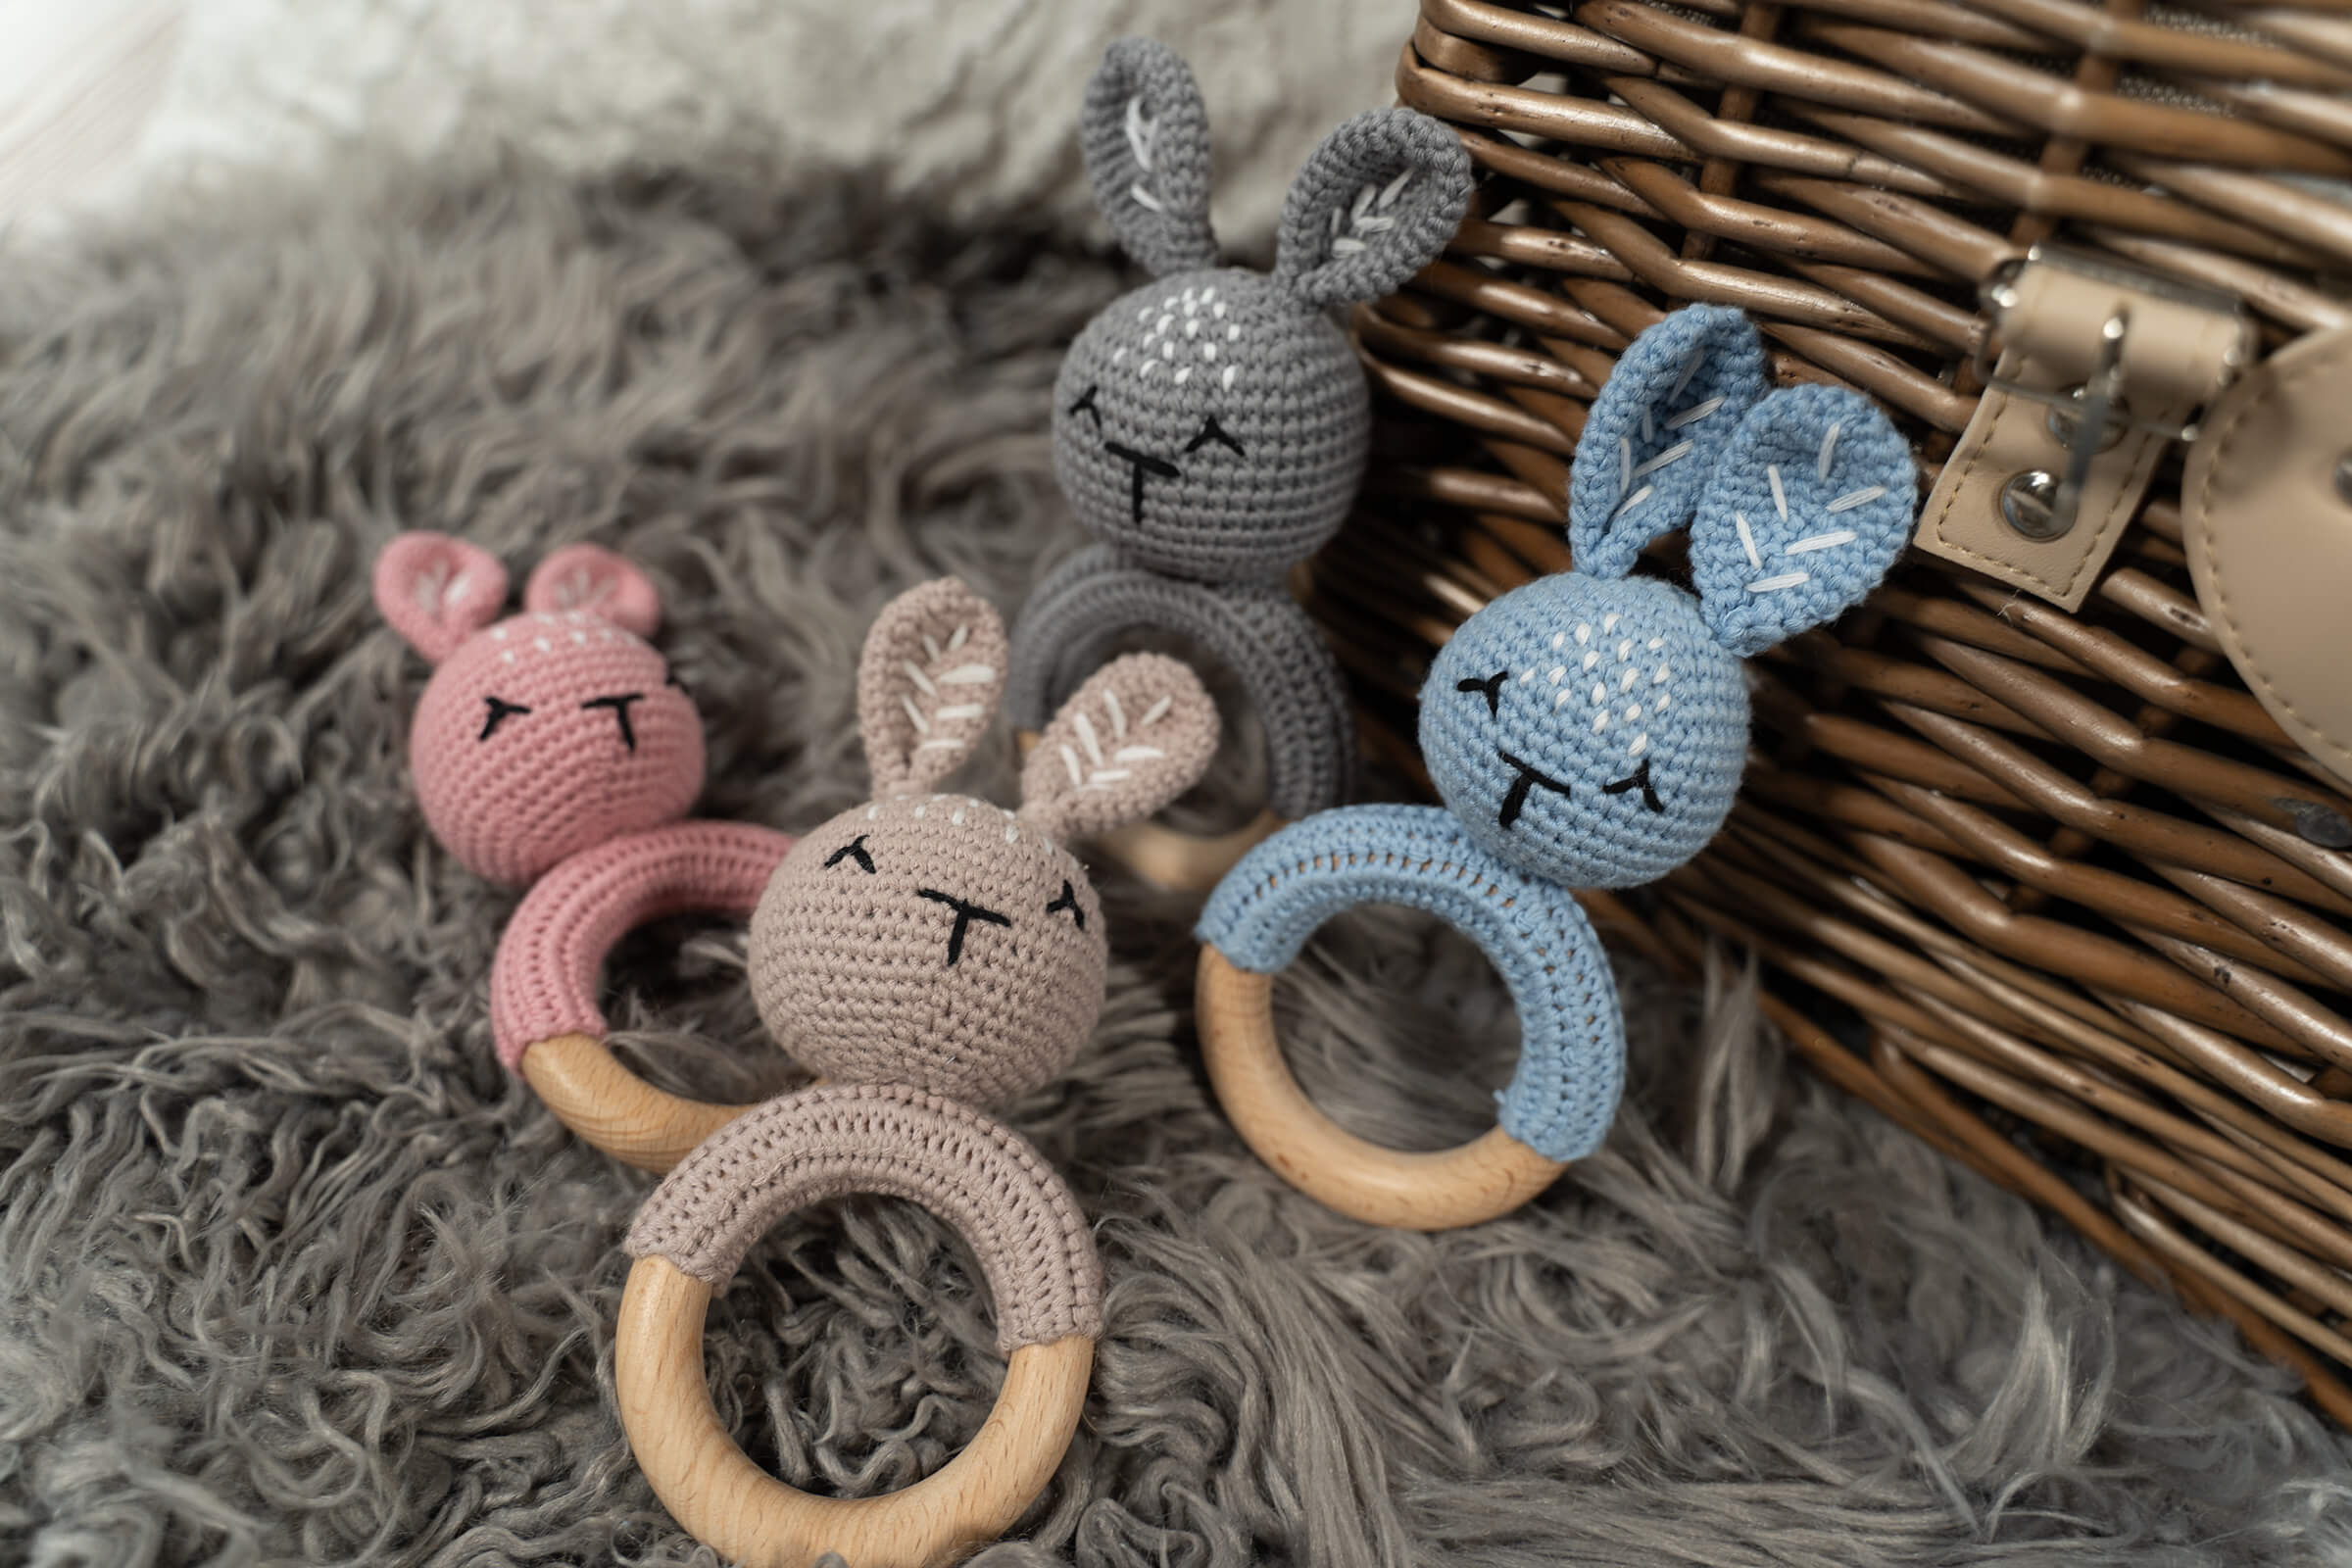 Crochet Bunny Rattle - Grey